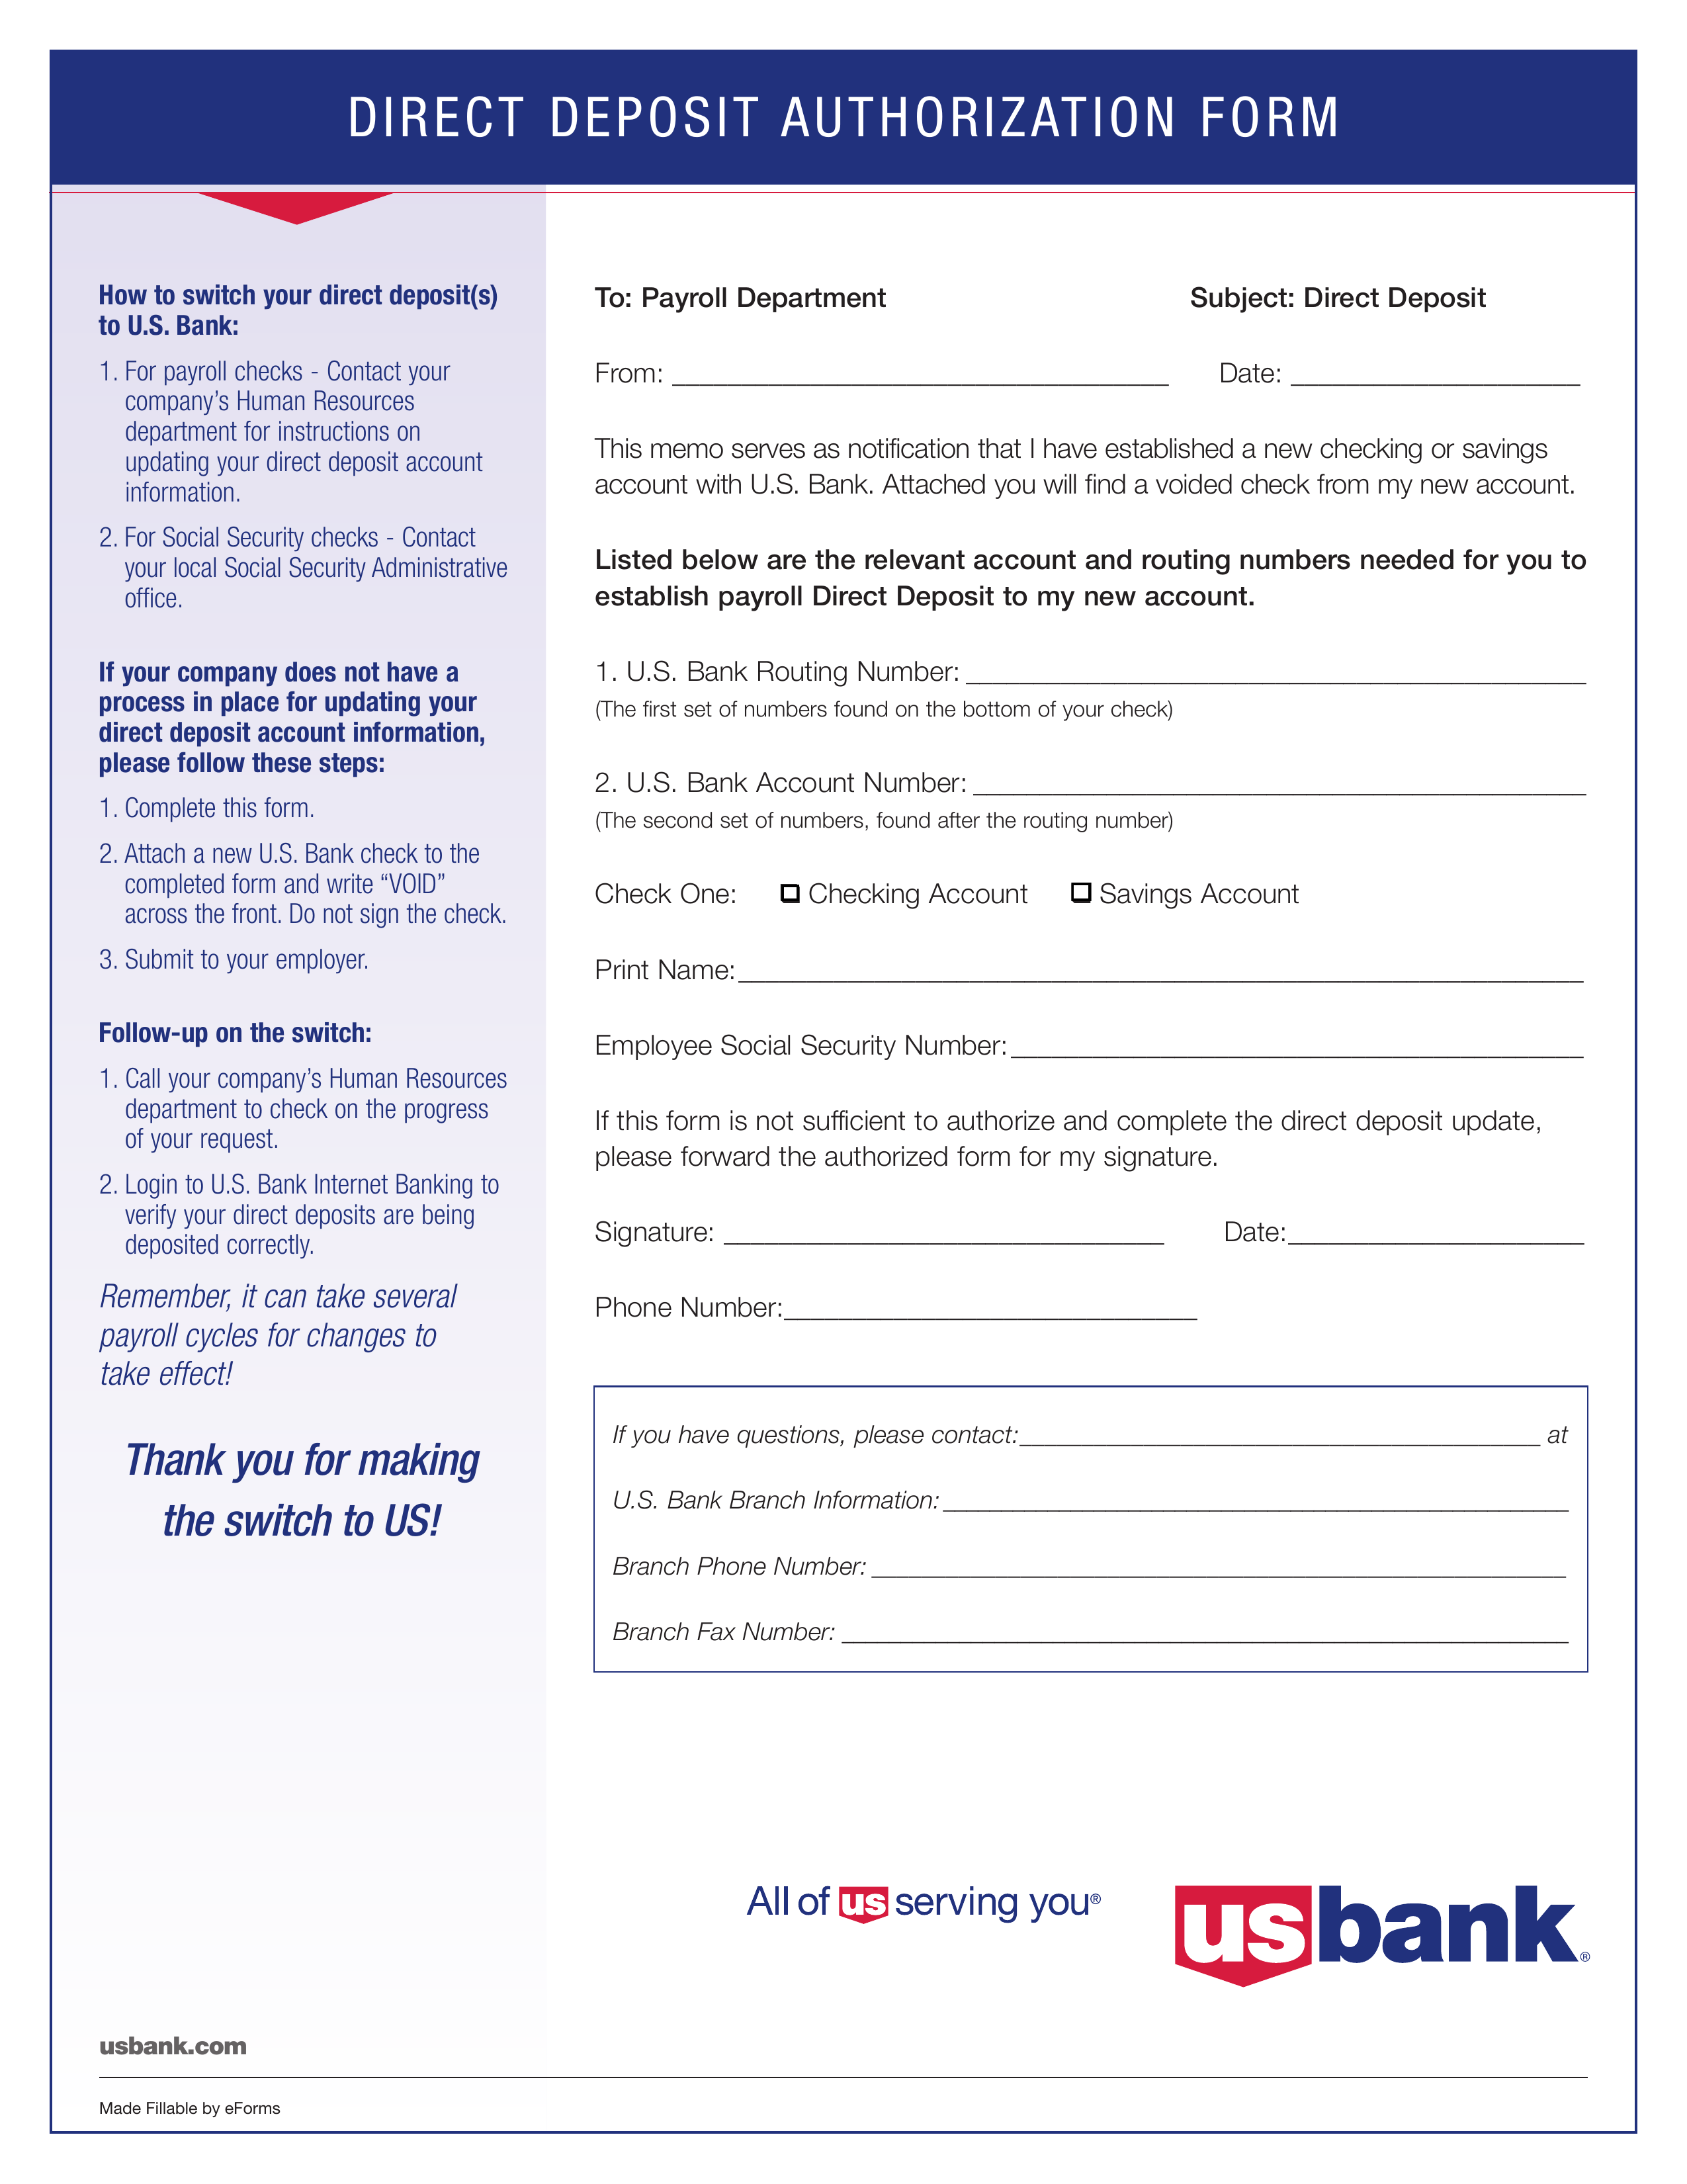 U.S. Bank Direct Deposit Authorization Form